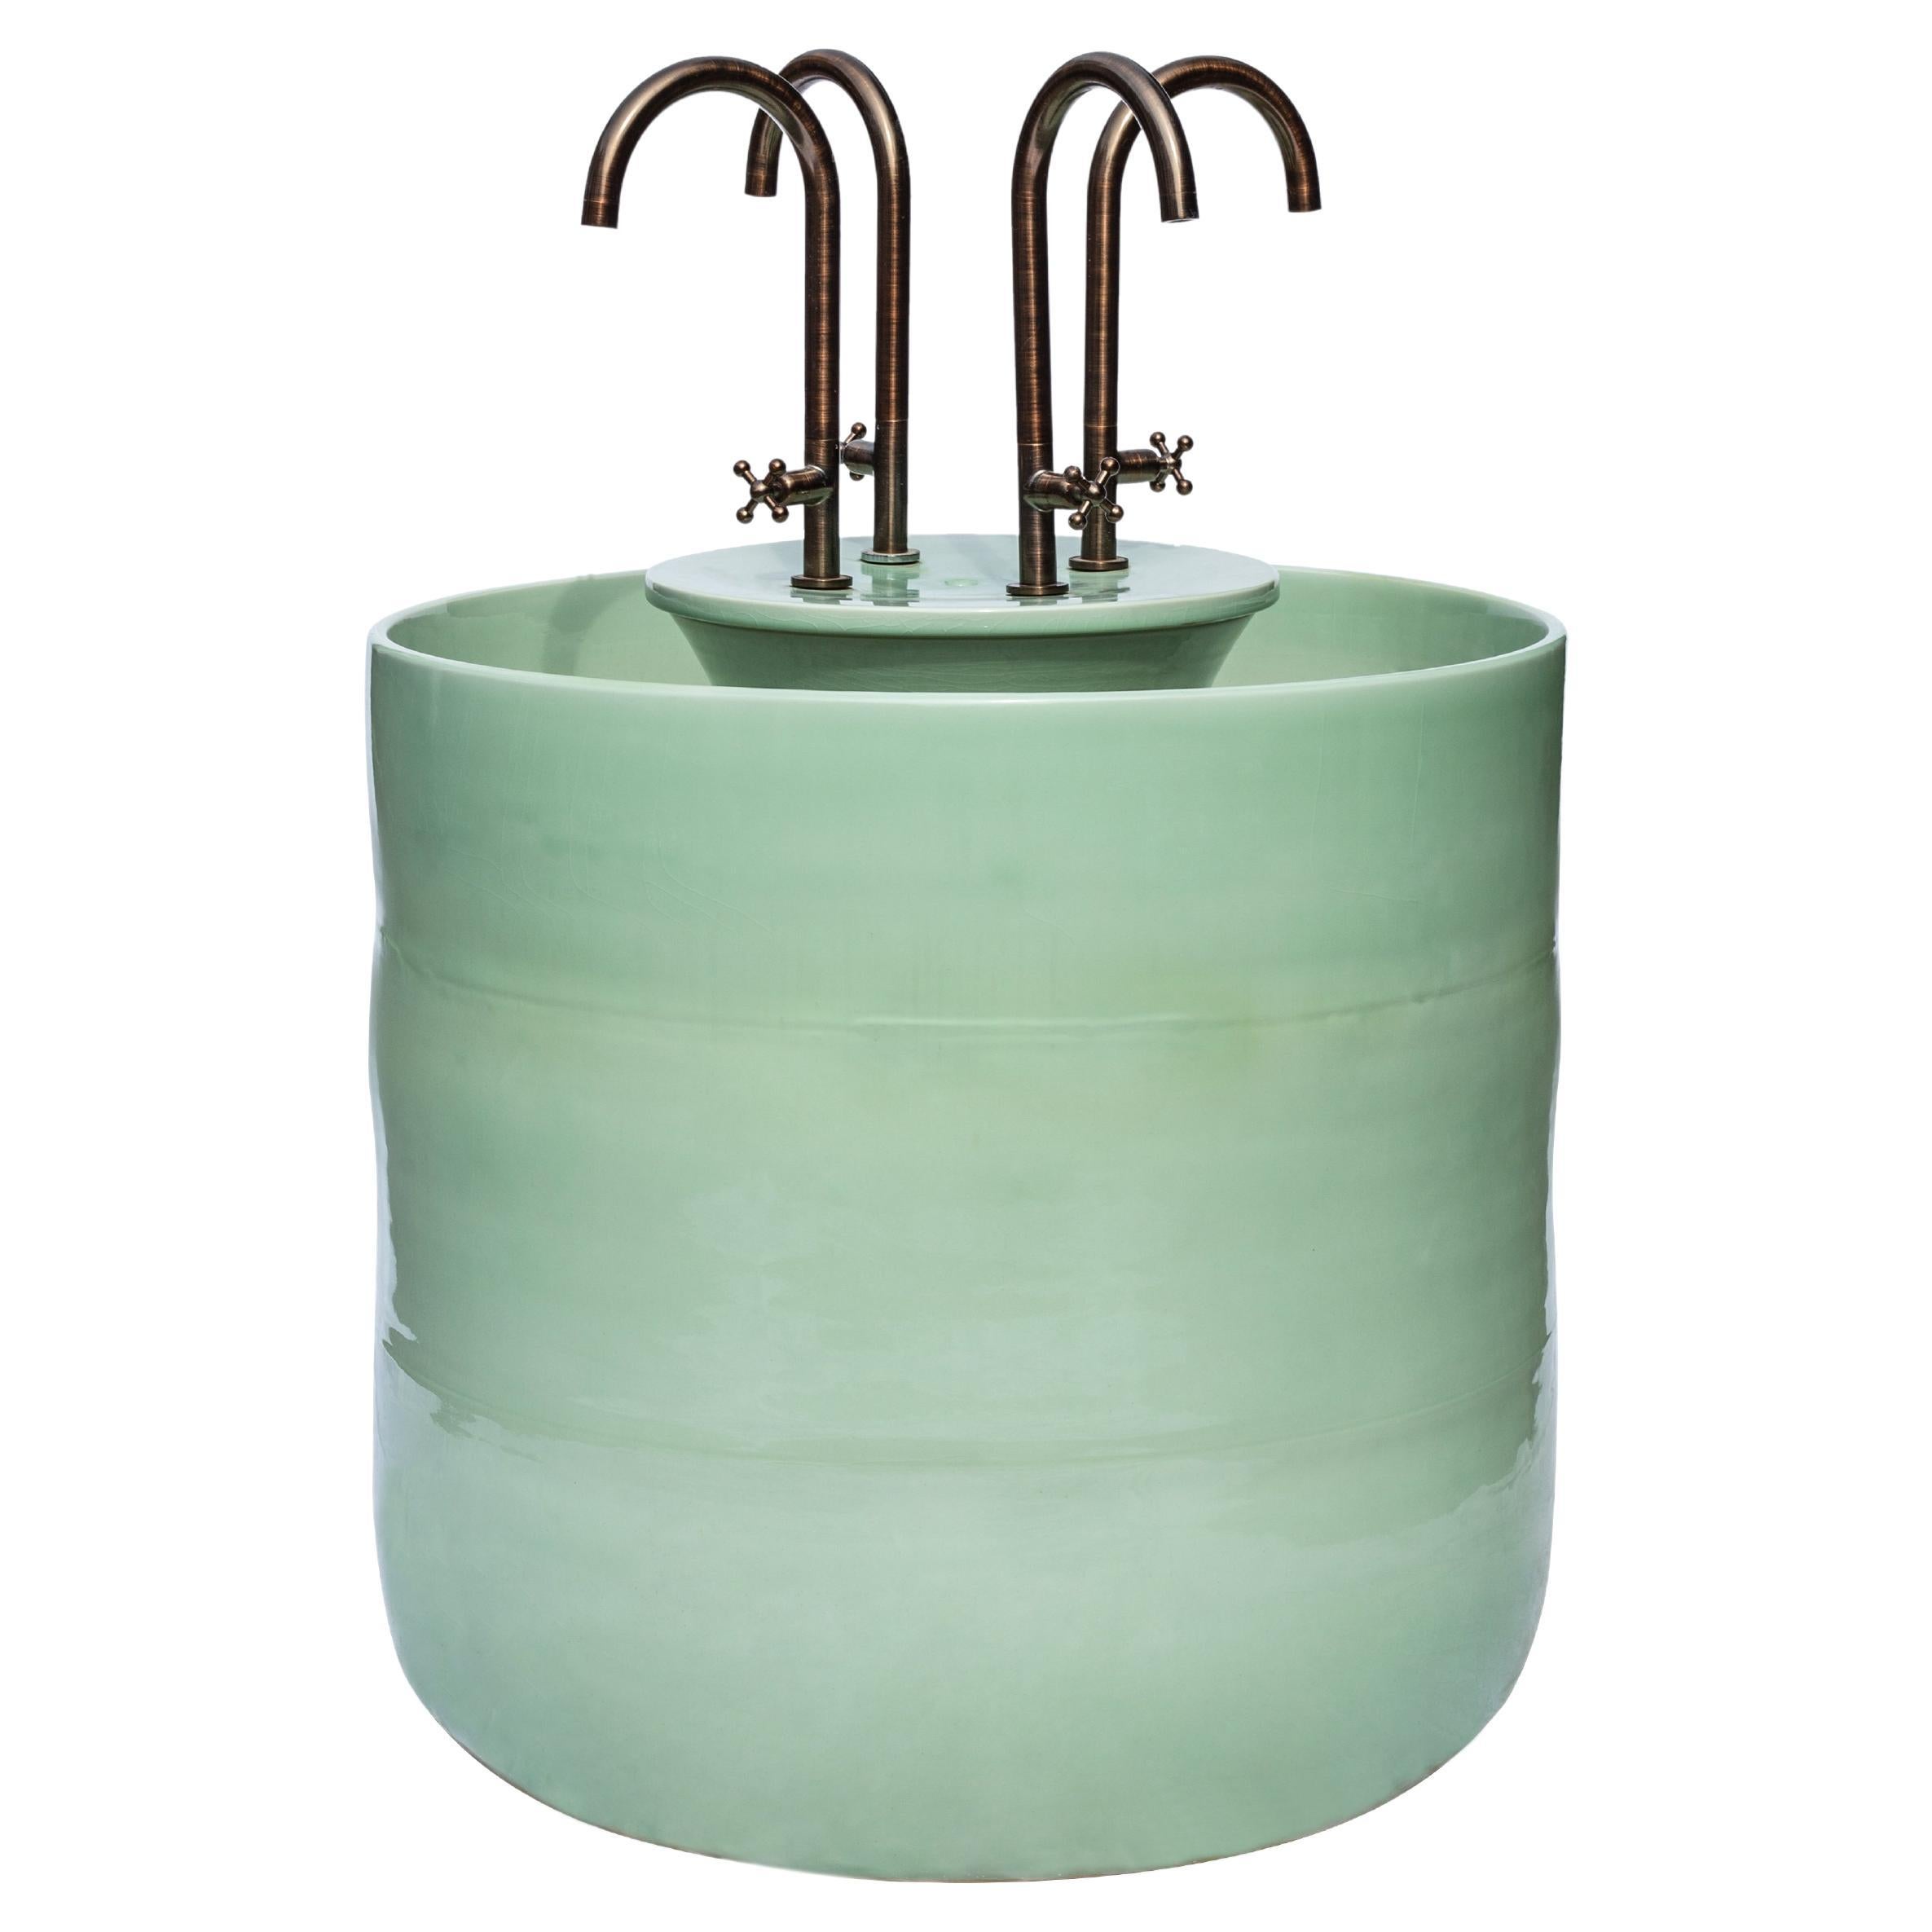 Aqua Botanica Washbasin by WL Ceramics For Sale